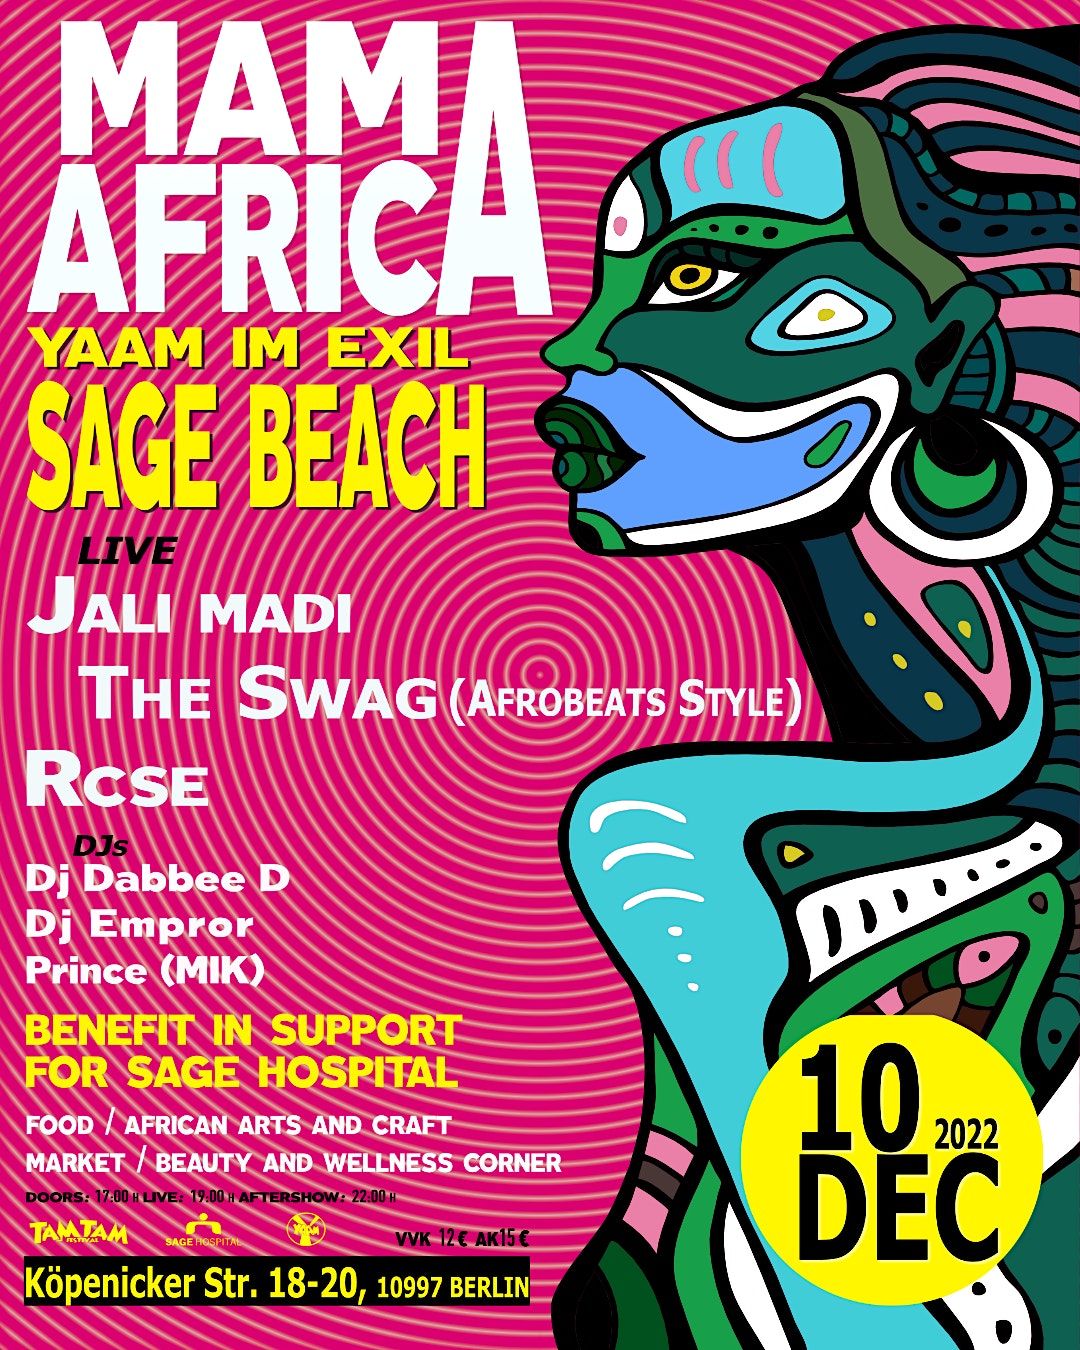 Mama Africa! @ SAGE Beach | YAAM im Exil